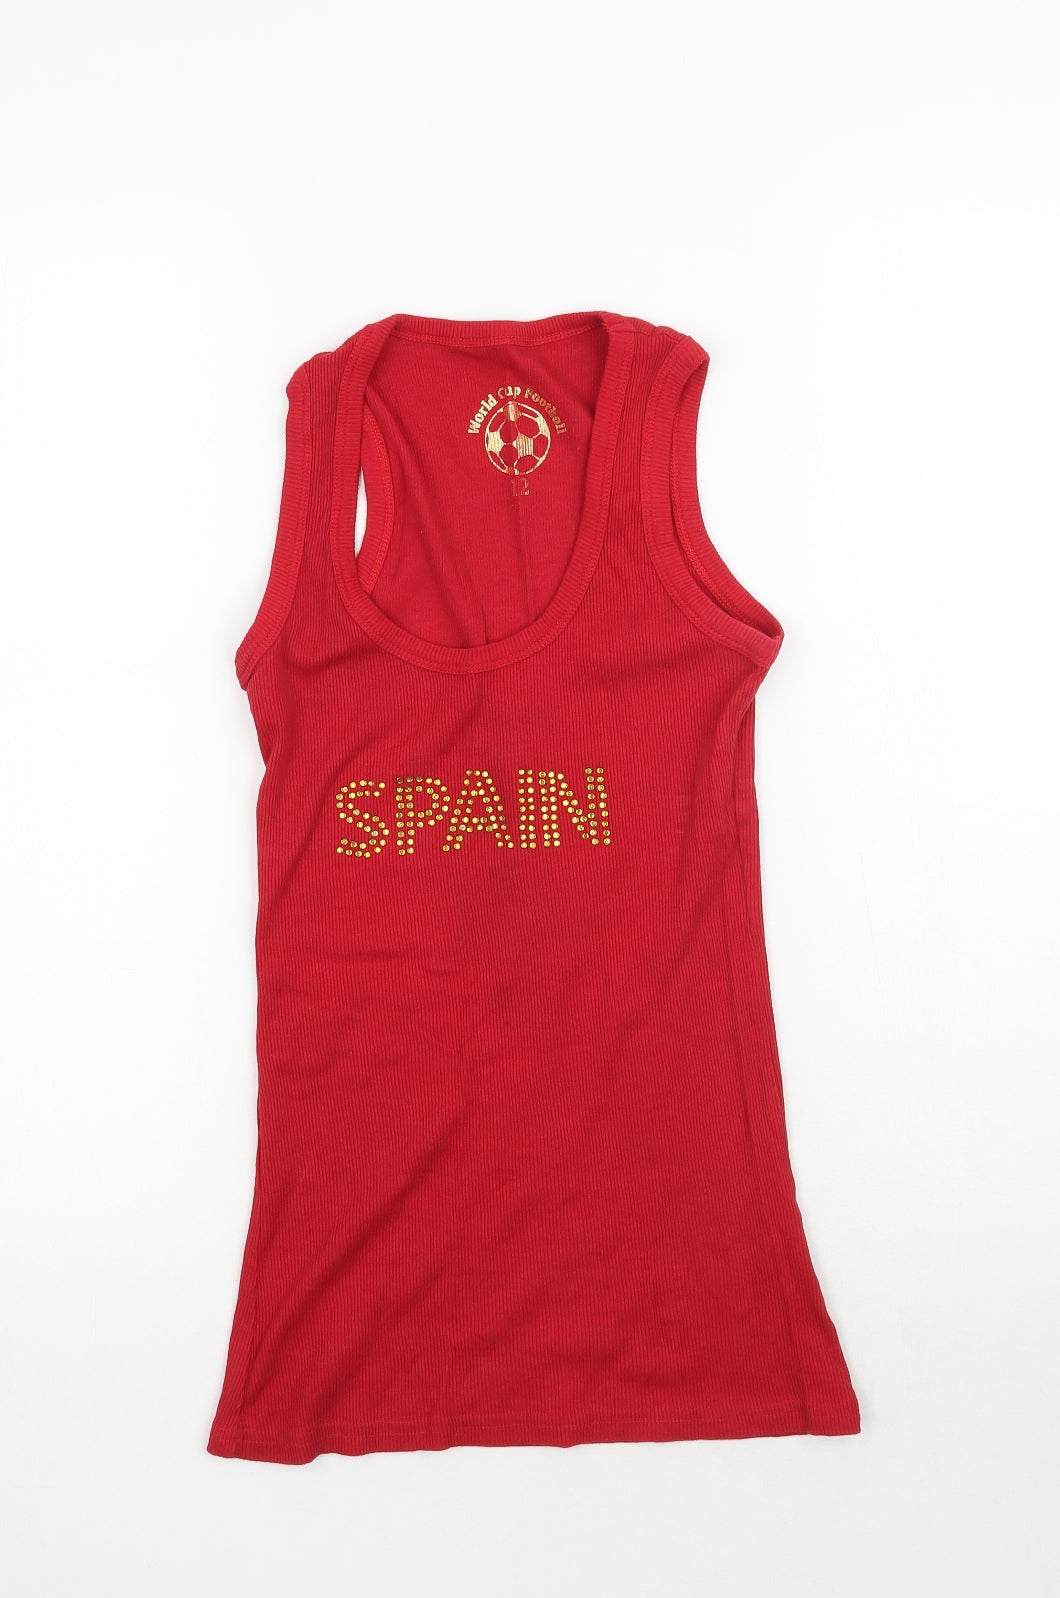 Preworn Womens Red   Basic Tank Size 12  - Spain World Cup Football